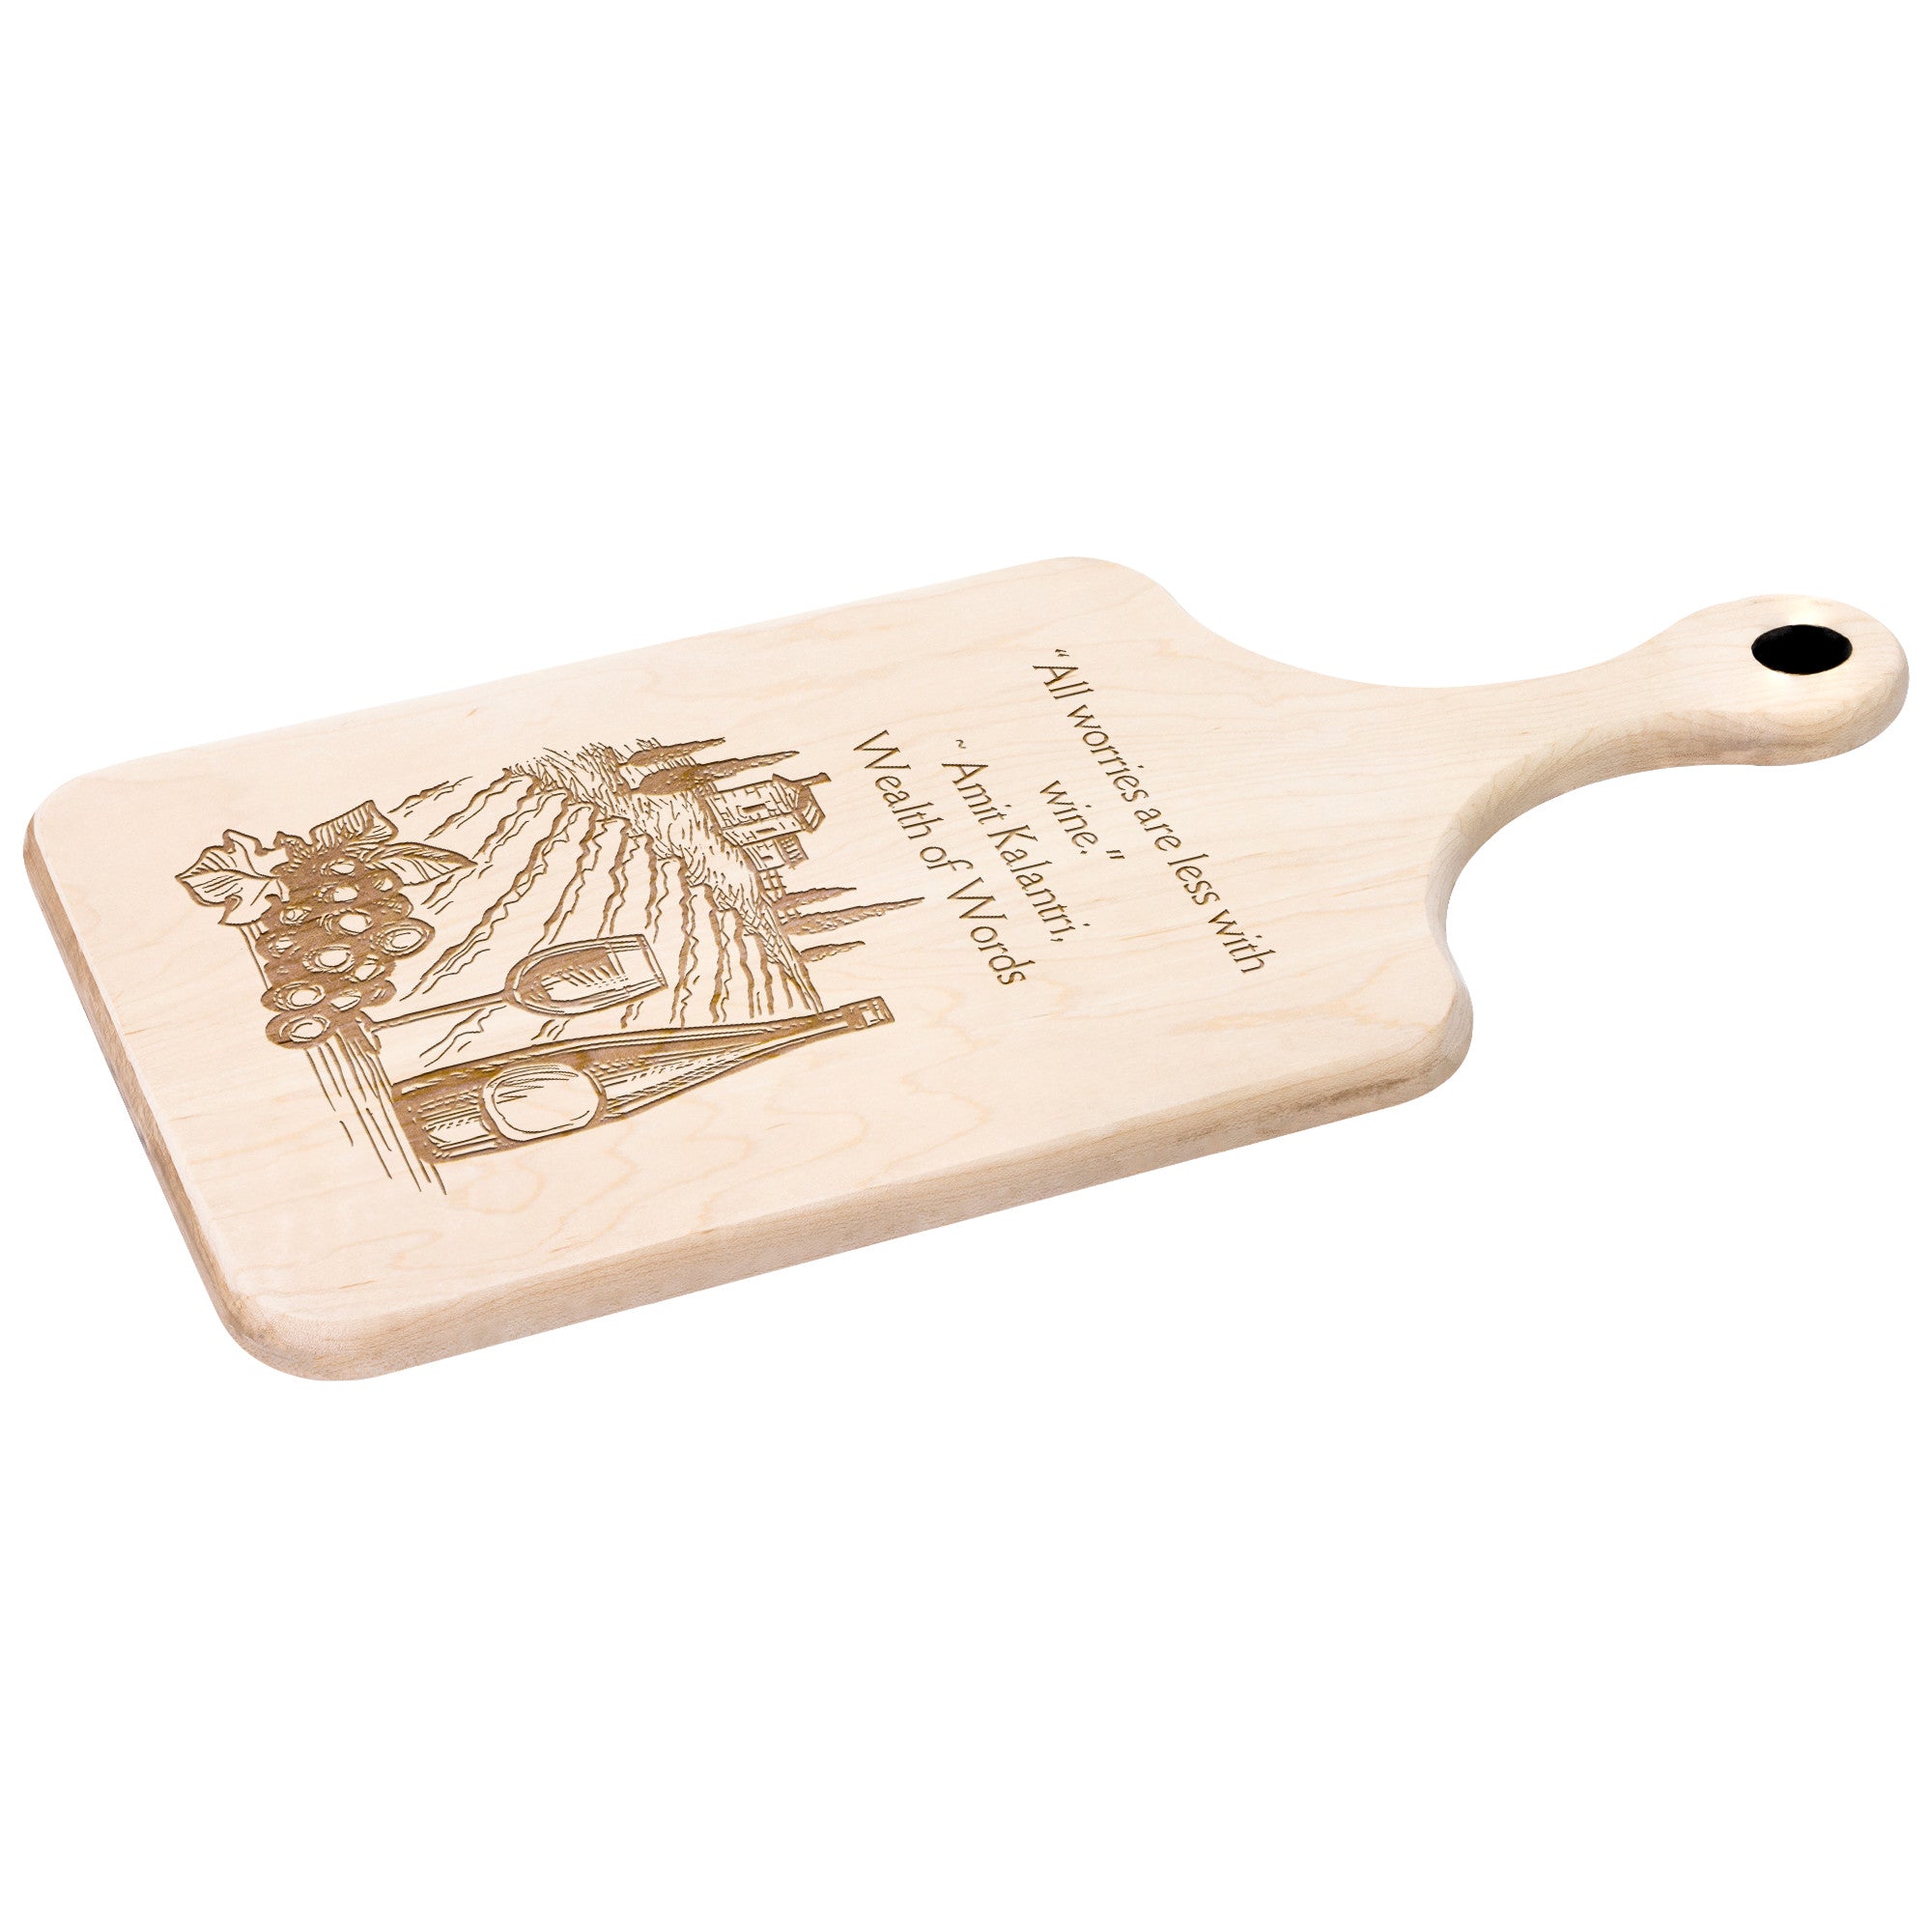 Hardwood Paddle Cutting Board - Variant 01